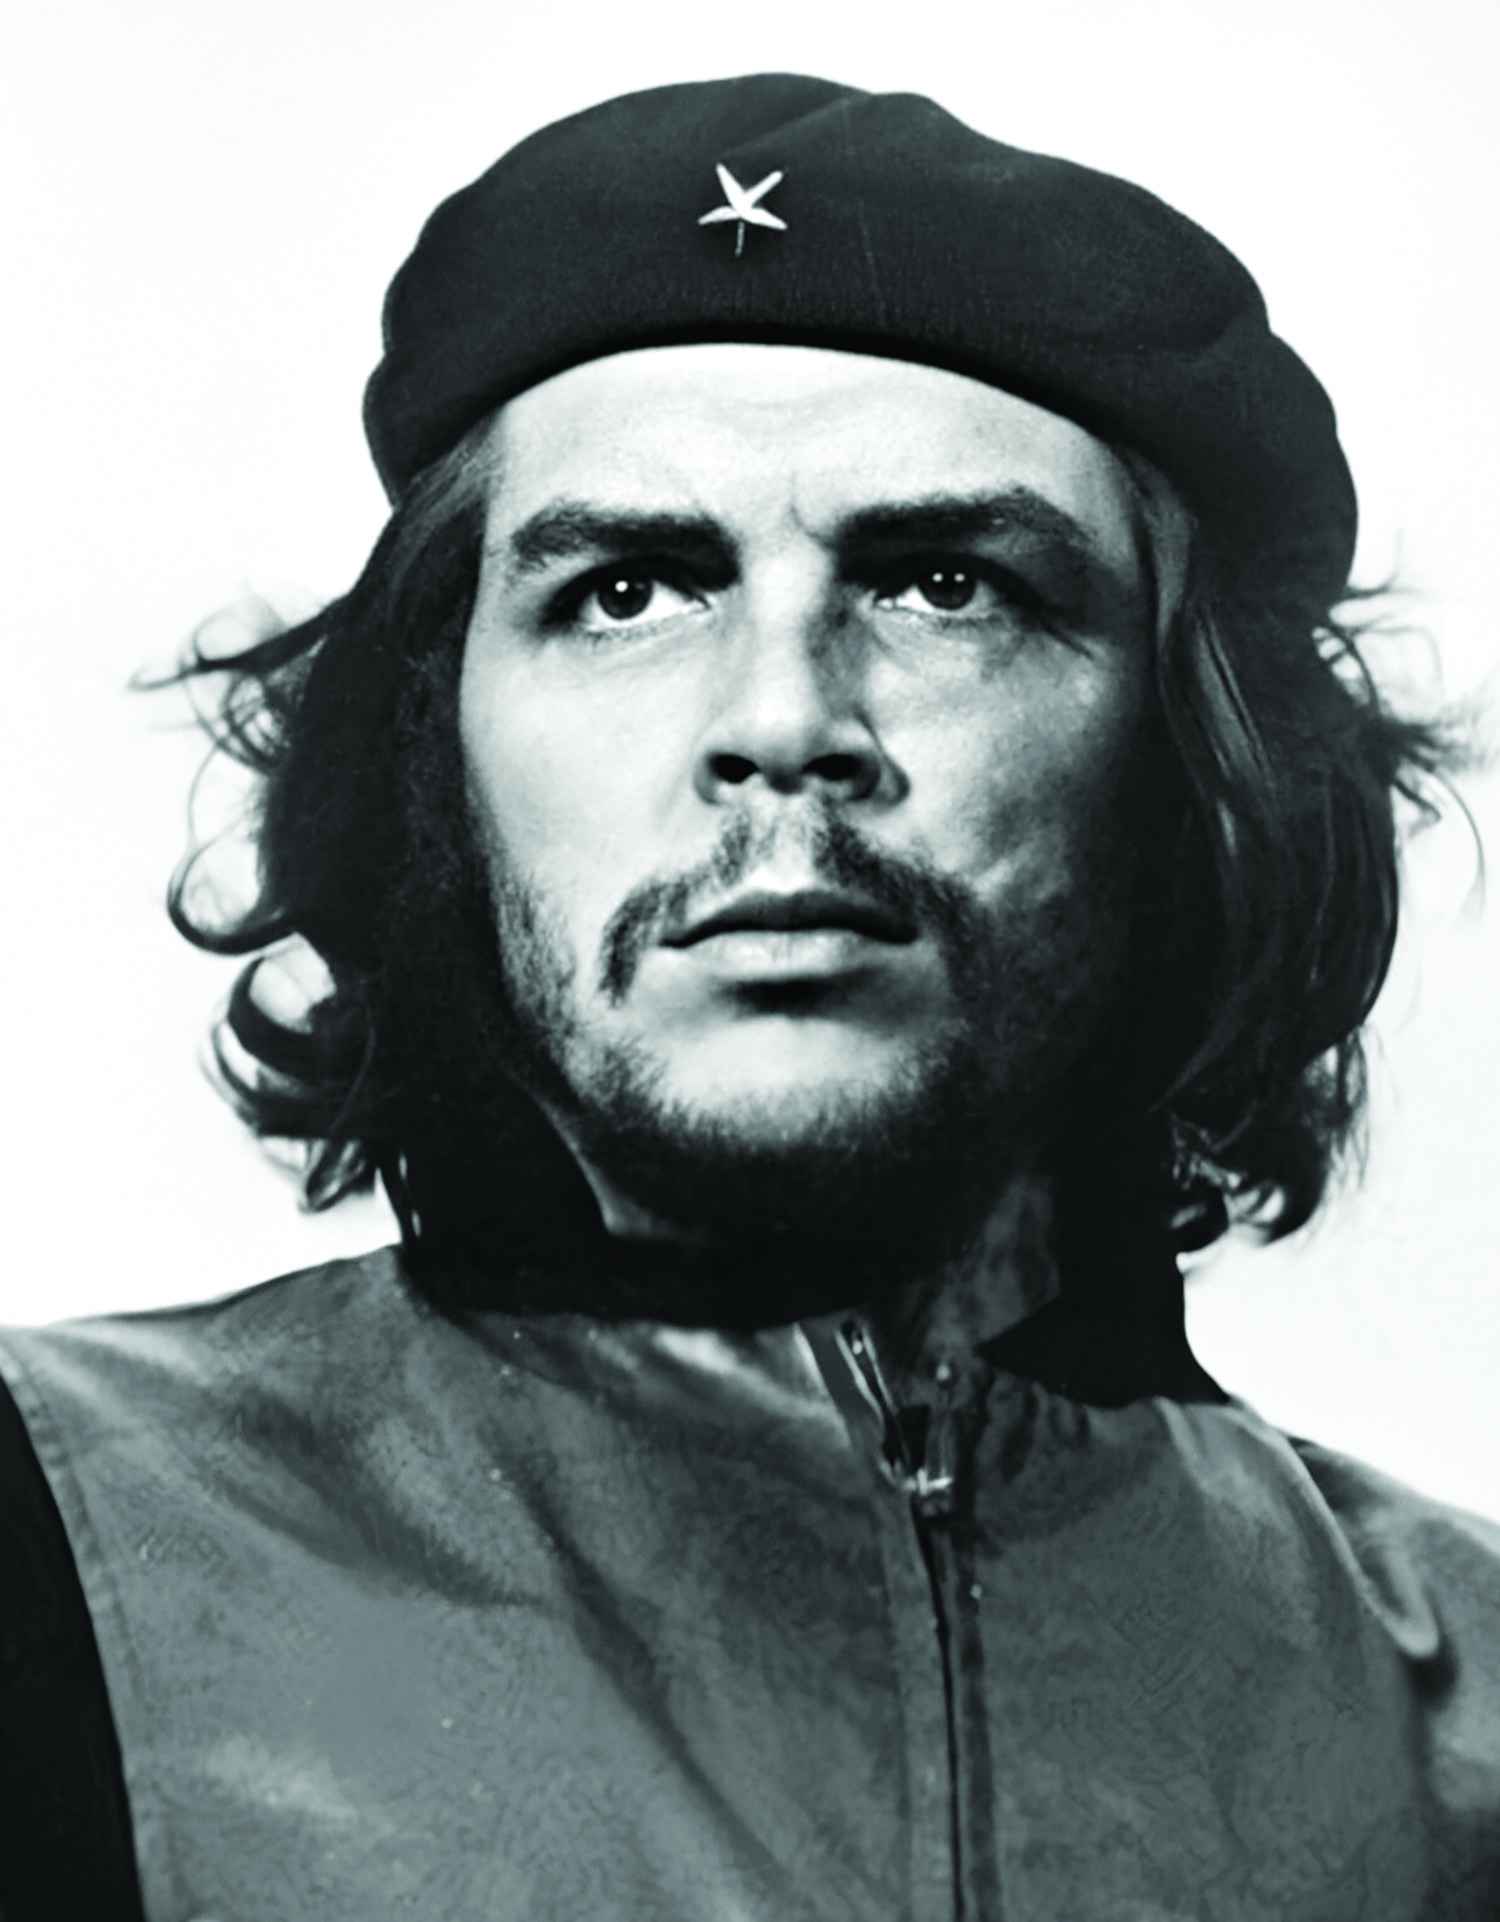 El asesinato del Che a manos del ejército boliviano